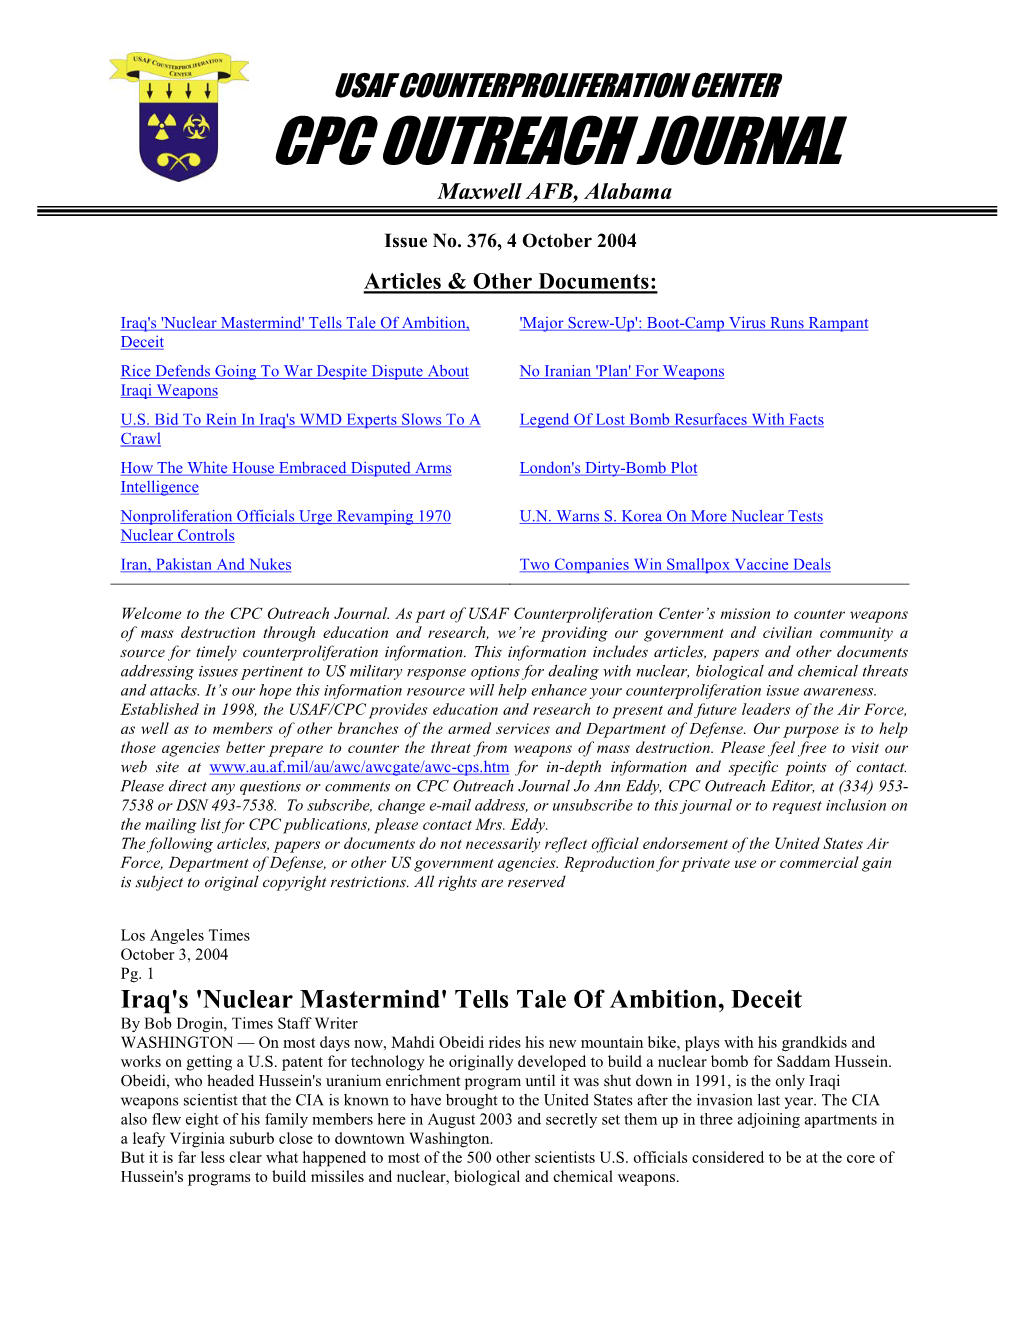 USAF Counterproliferation Center CPC Outreach Journal #376